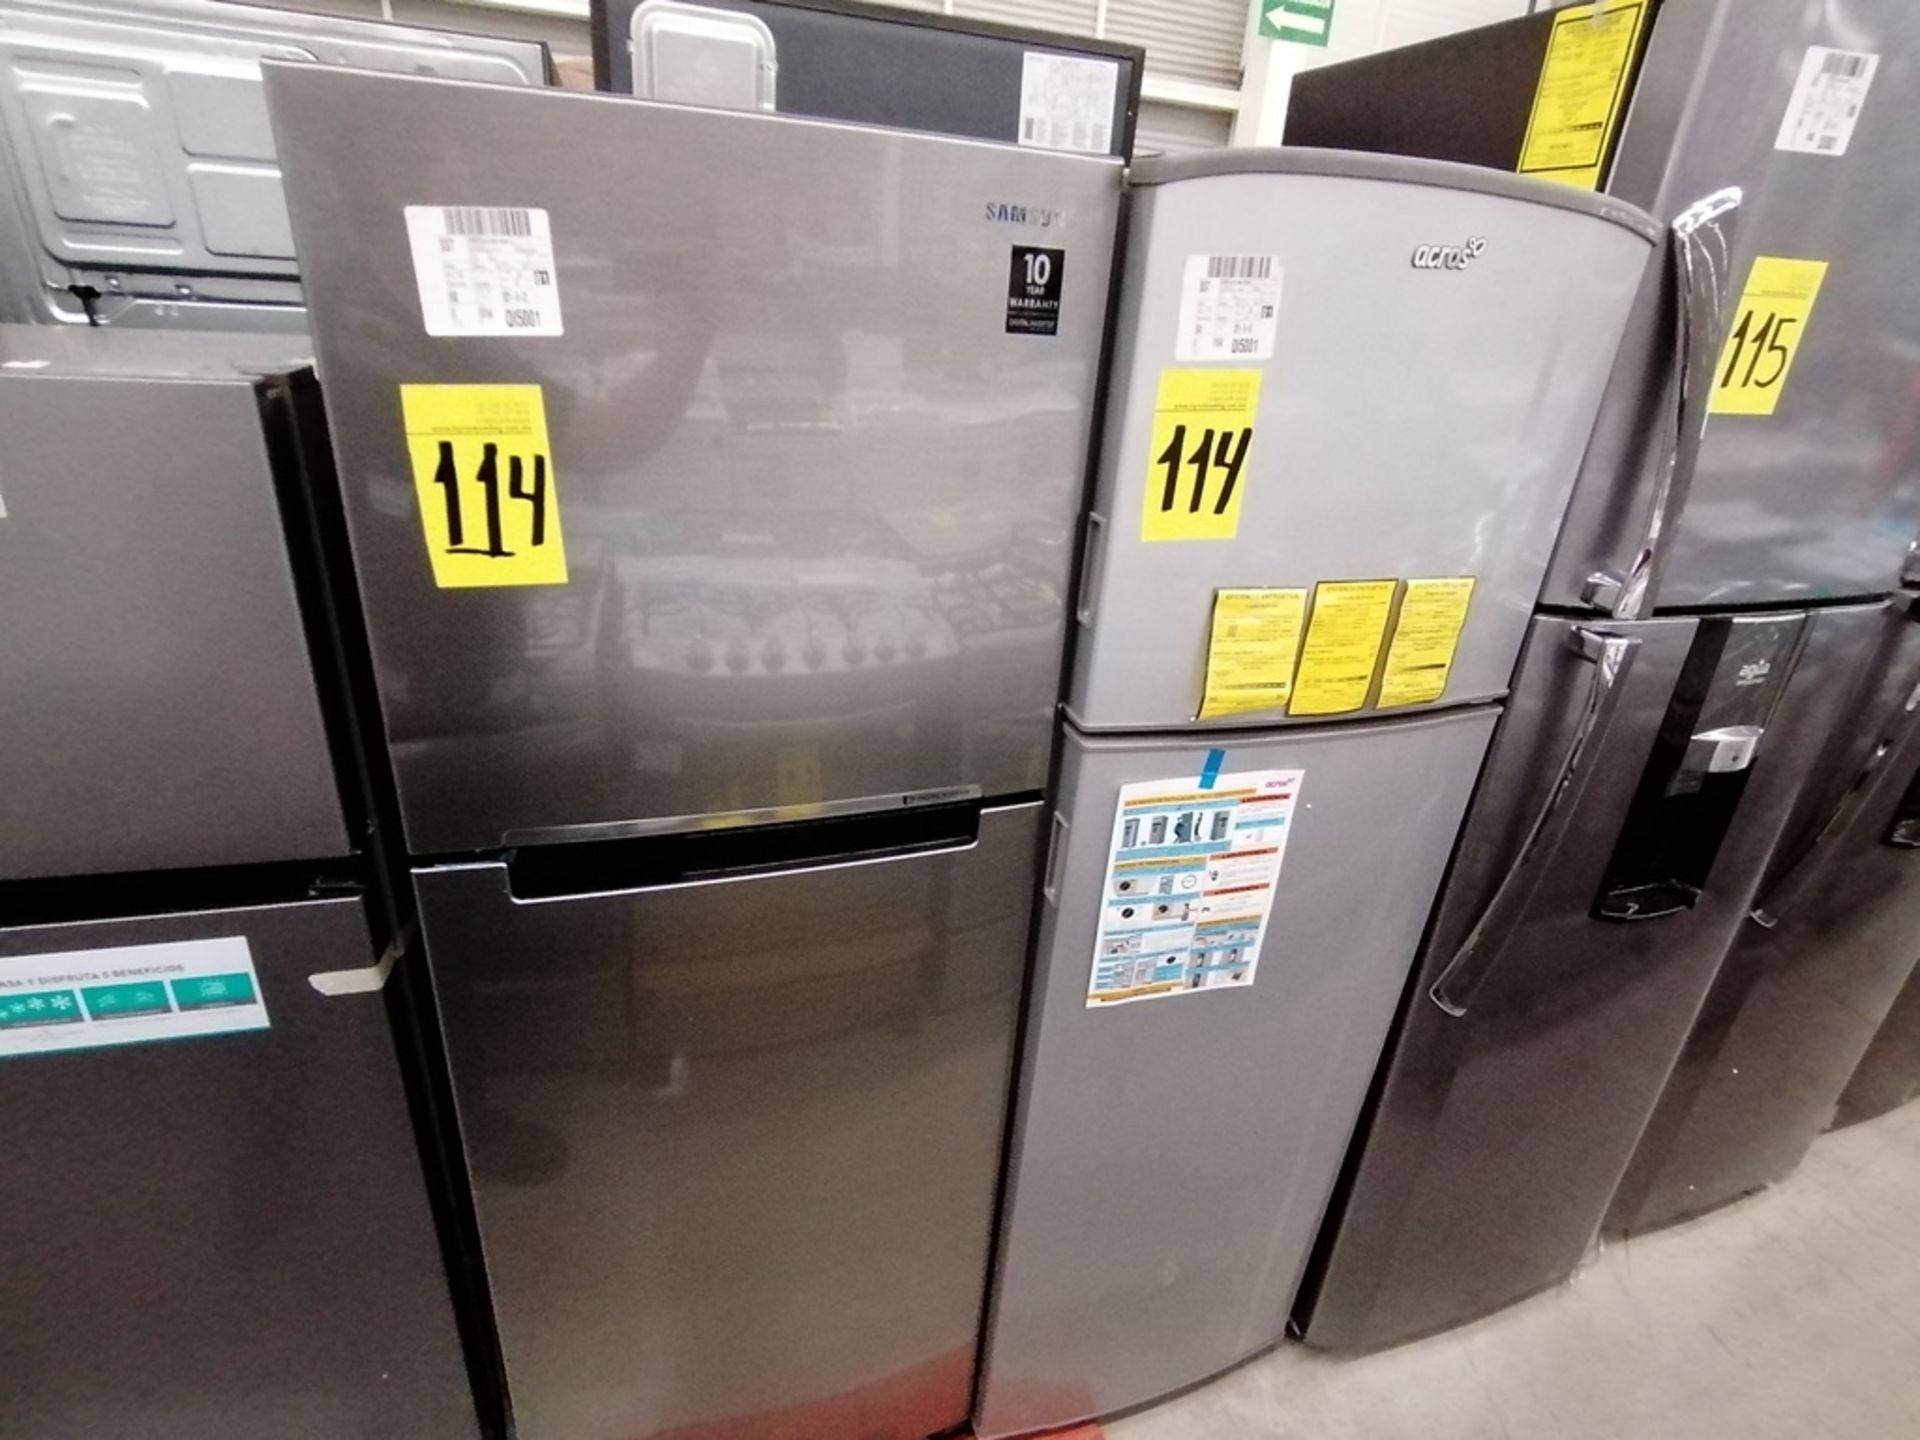 Lote de 2 refrigeradores incluye: 1 Refrigerador, Marca Samsung, Modelo RT29K500JS8, Serie 0AZS4BAR - Image 3 of 16